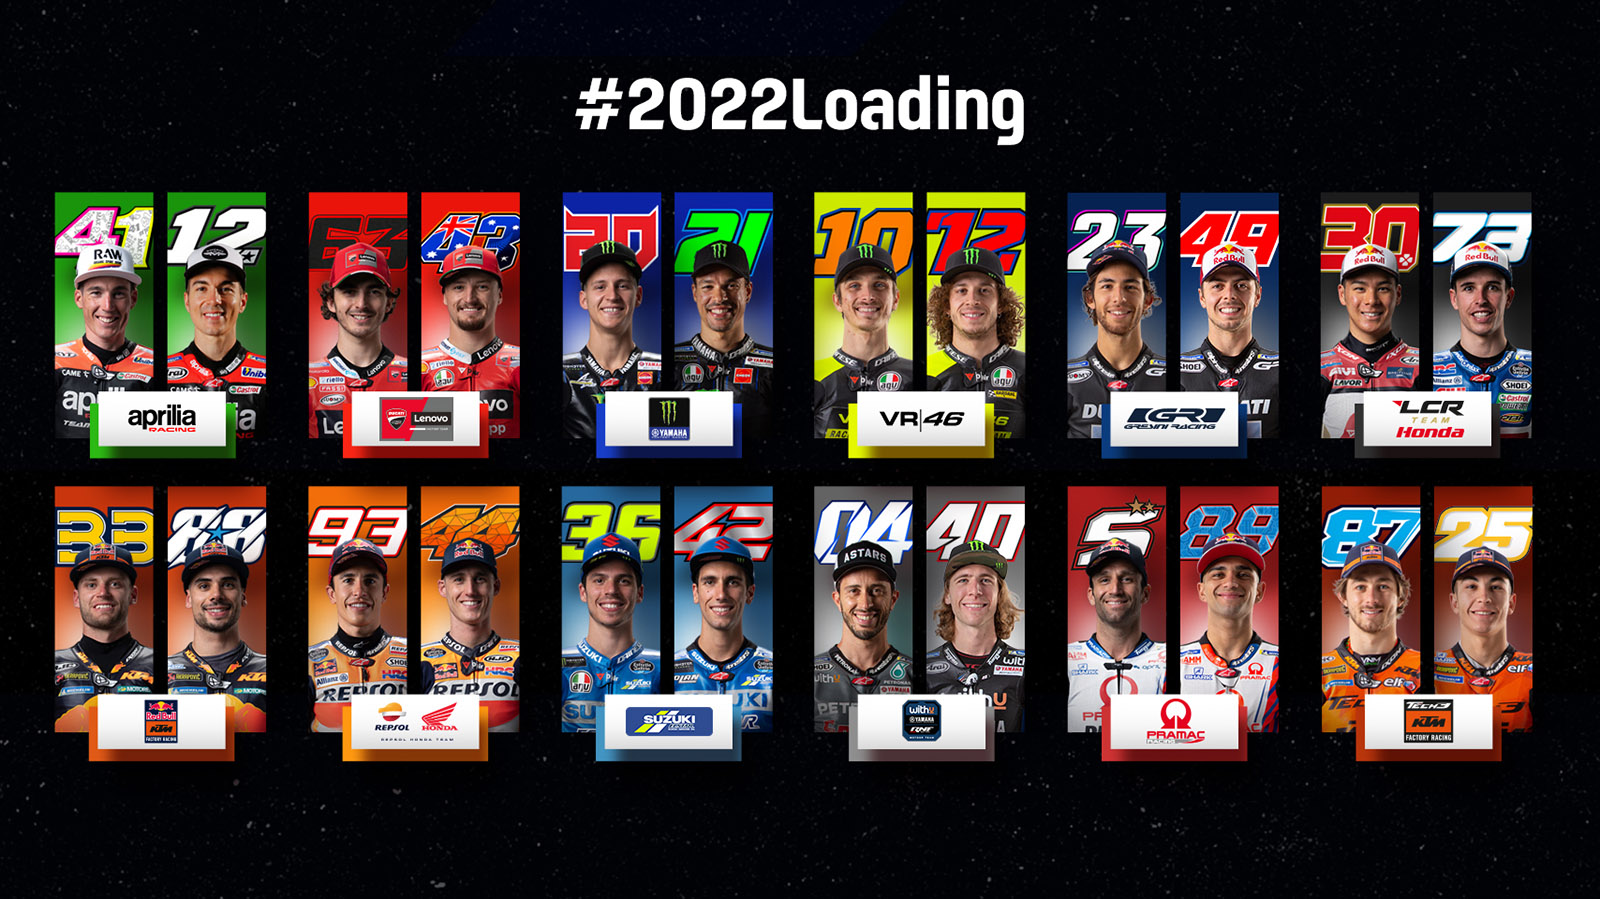 MotoGP 2022 lineup